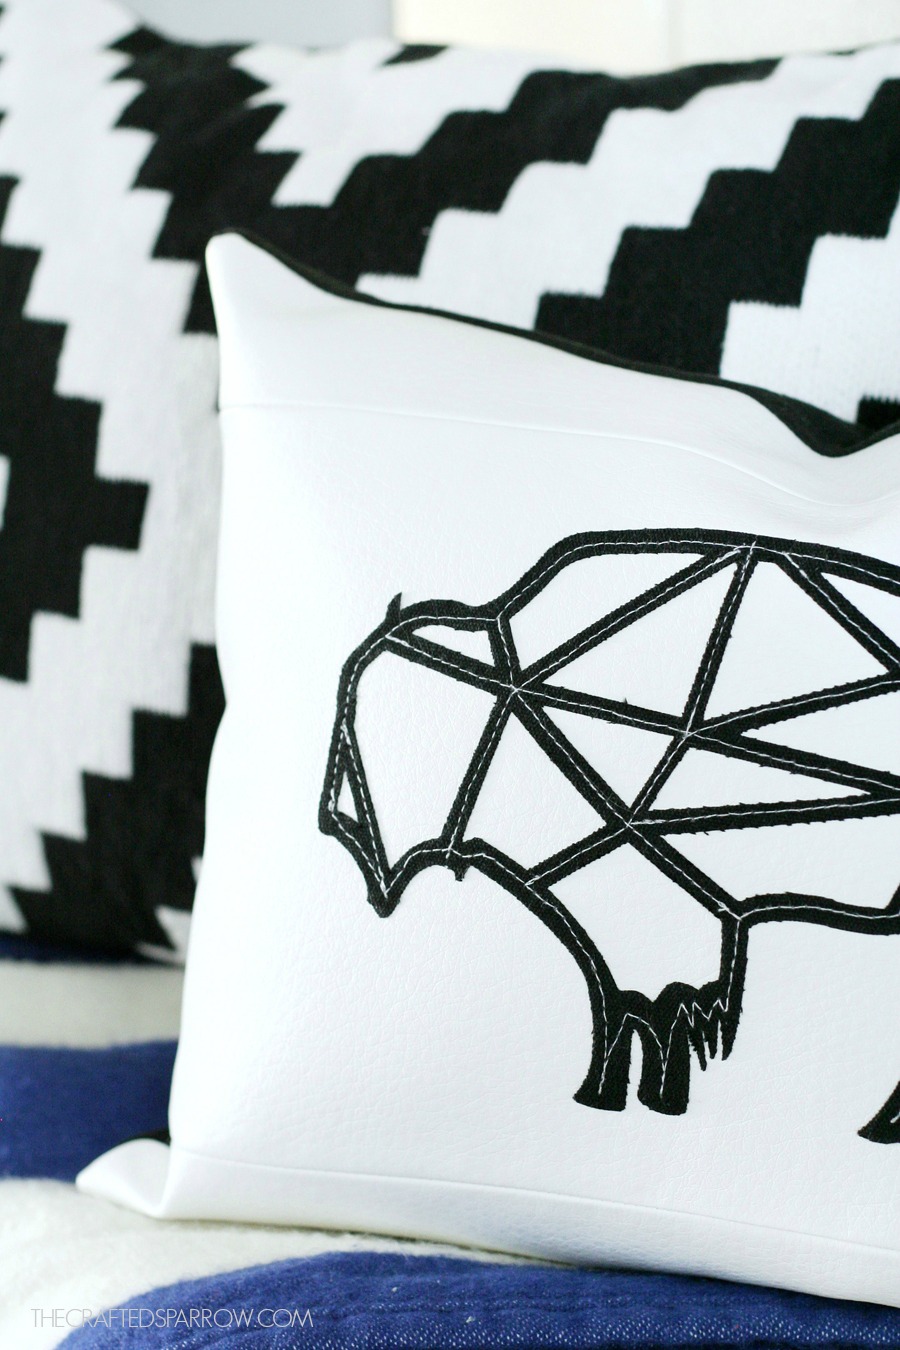 Leather Geometric Buffalo Pillow